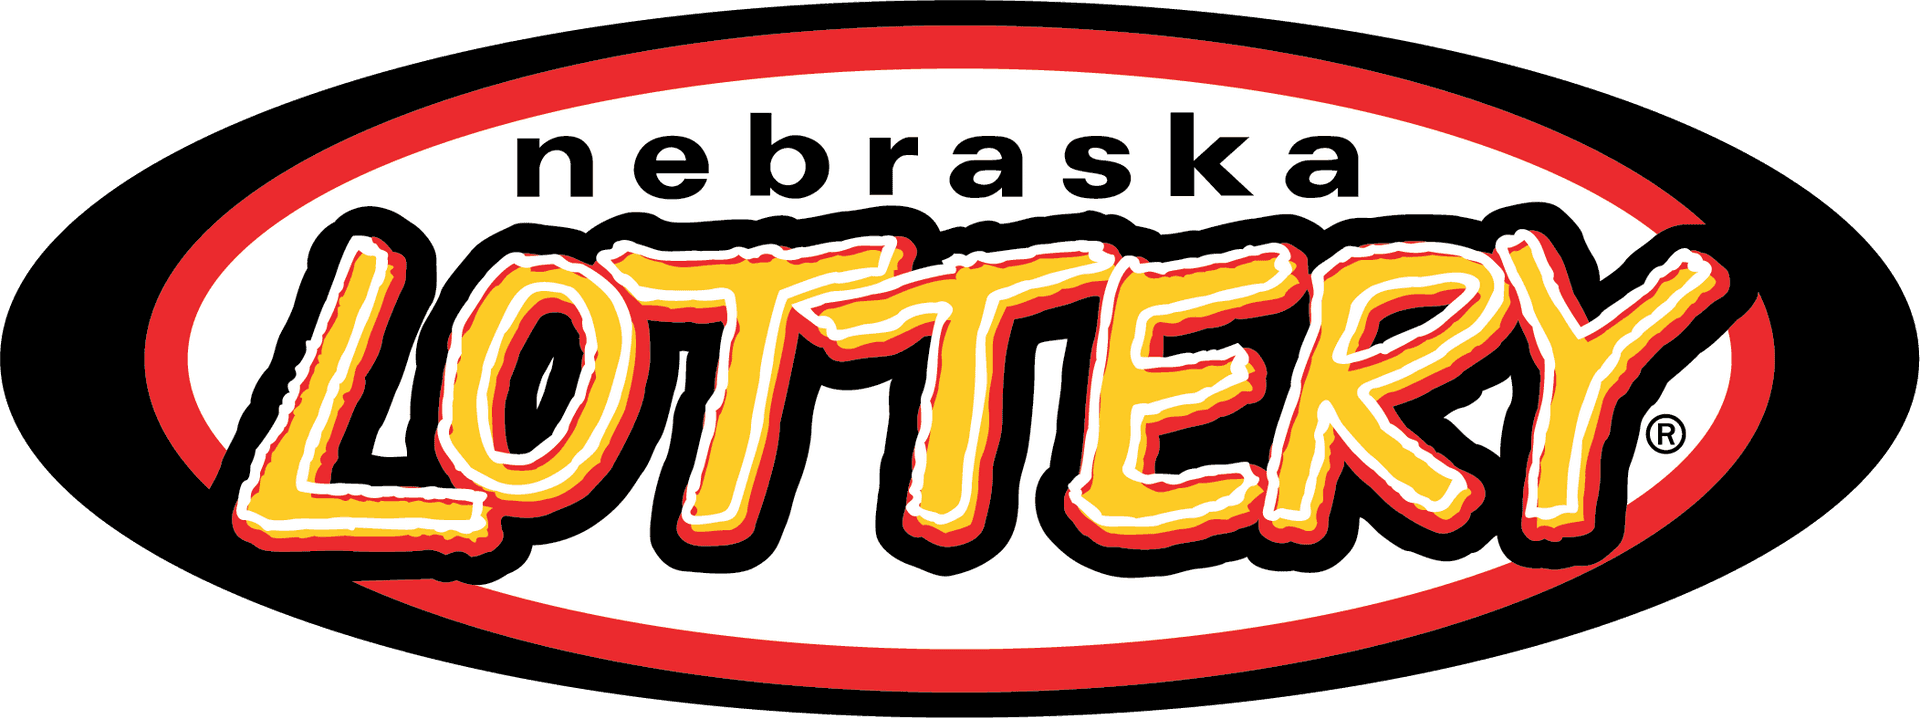 Nebraska Lottery Logo PNG image